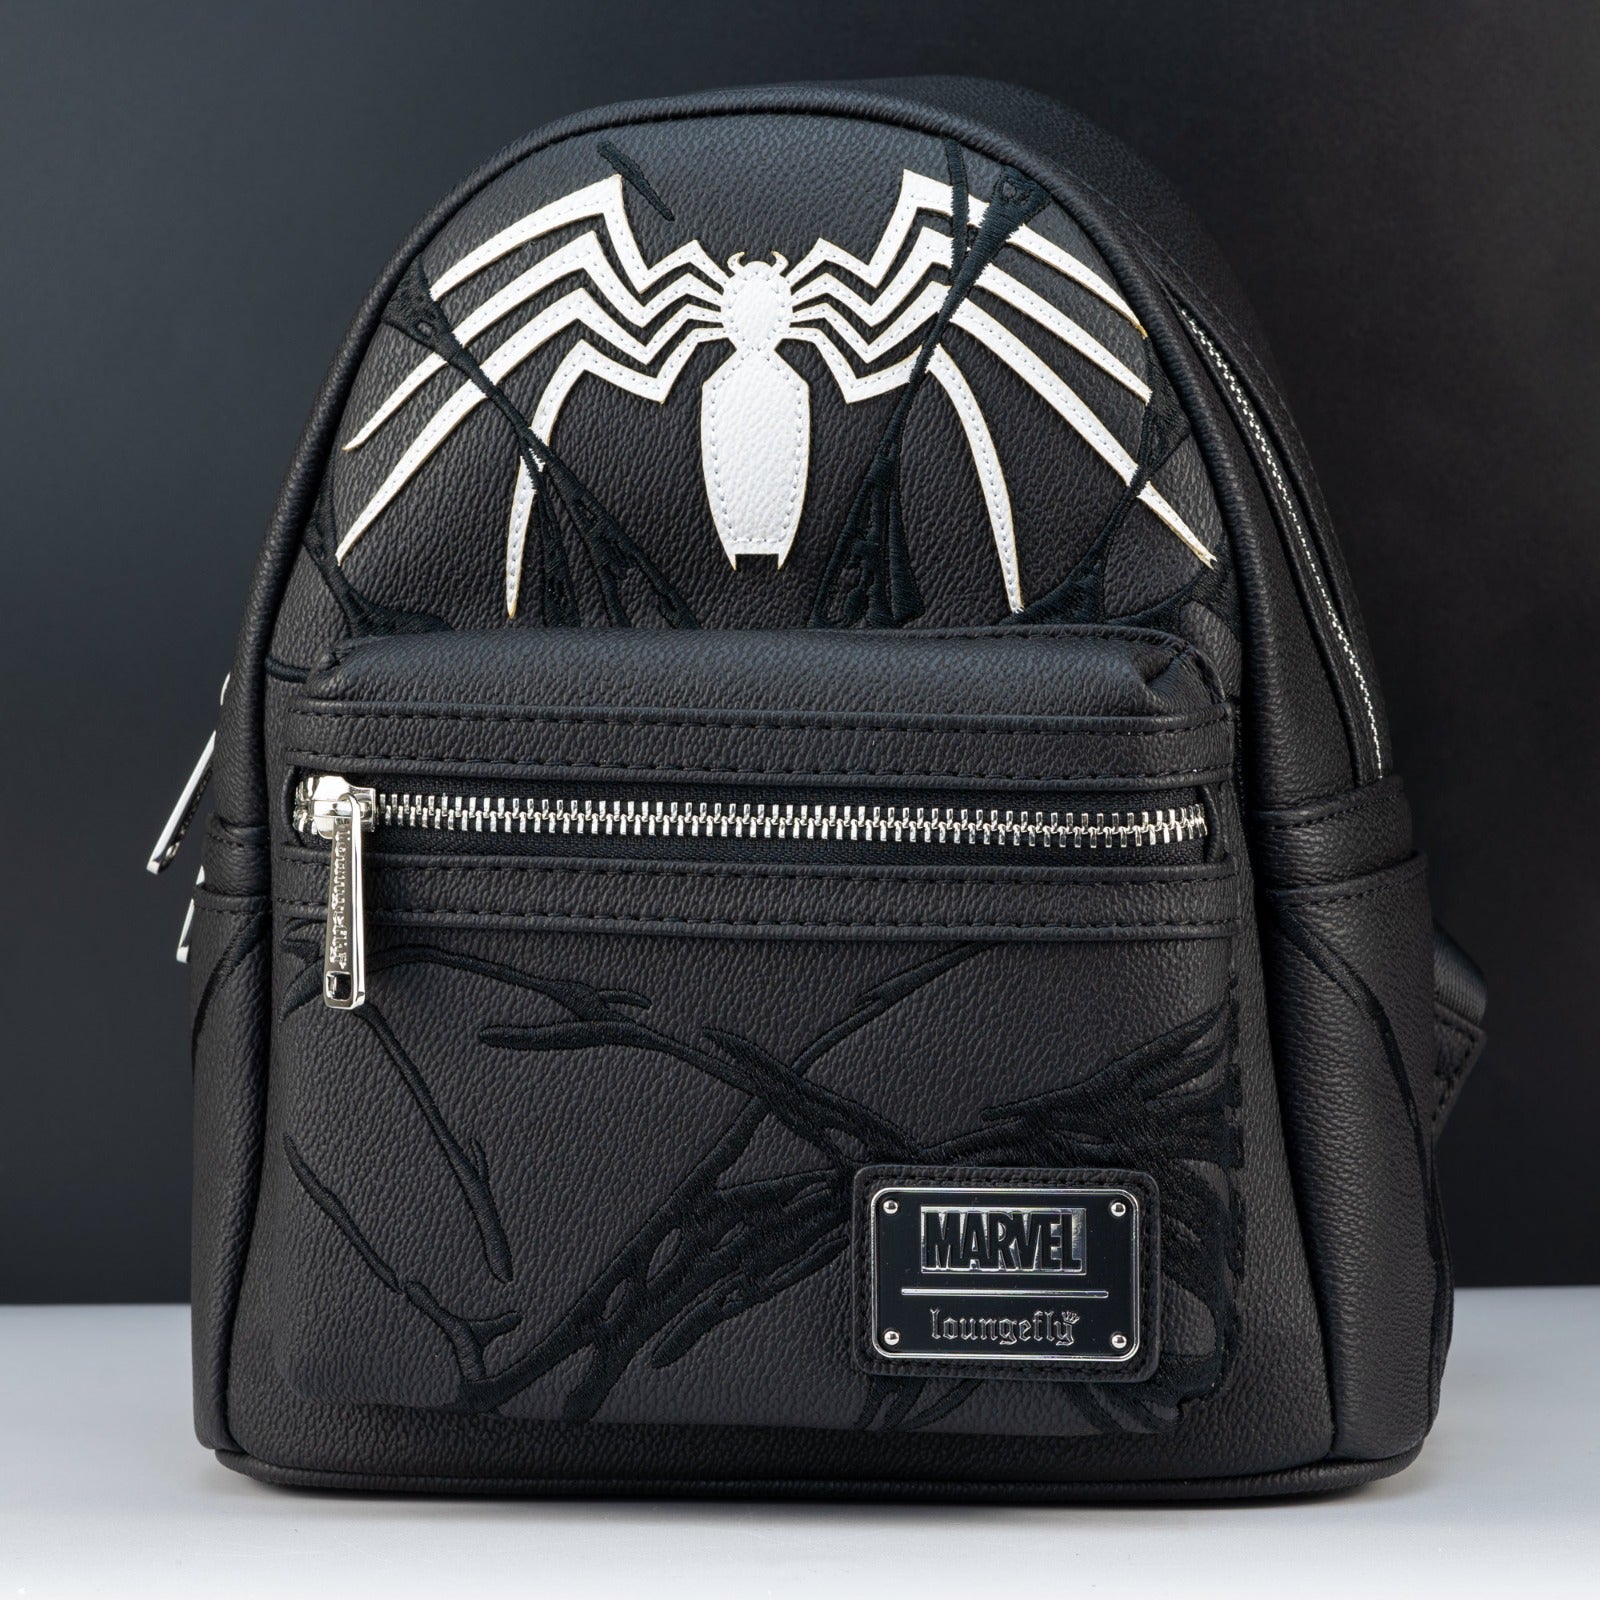 Loungefly x Marvel Venom Cosplay Mini Backpack